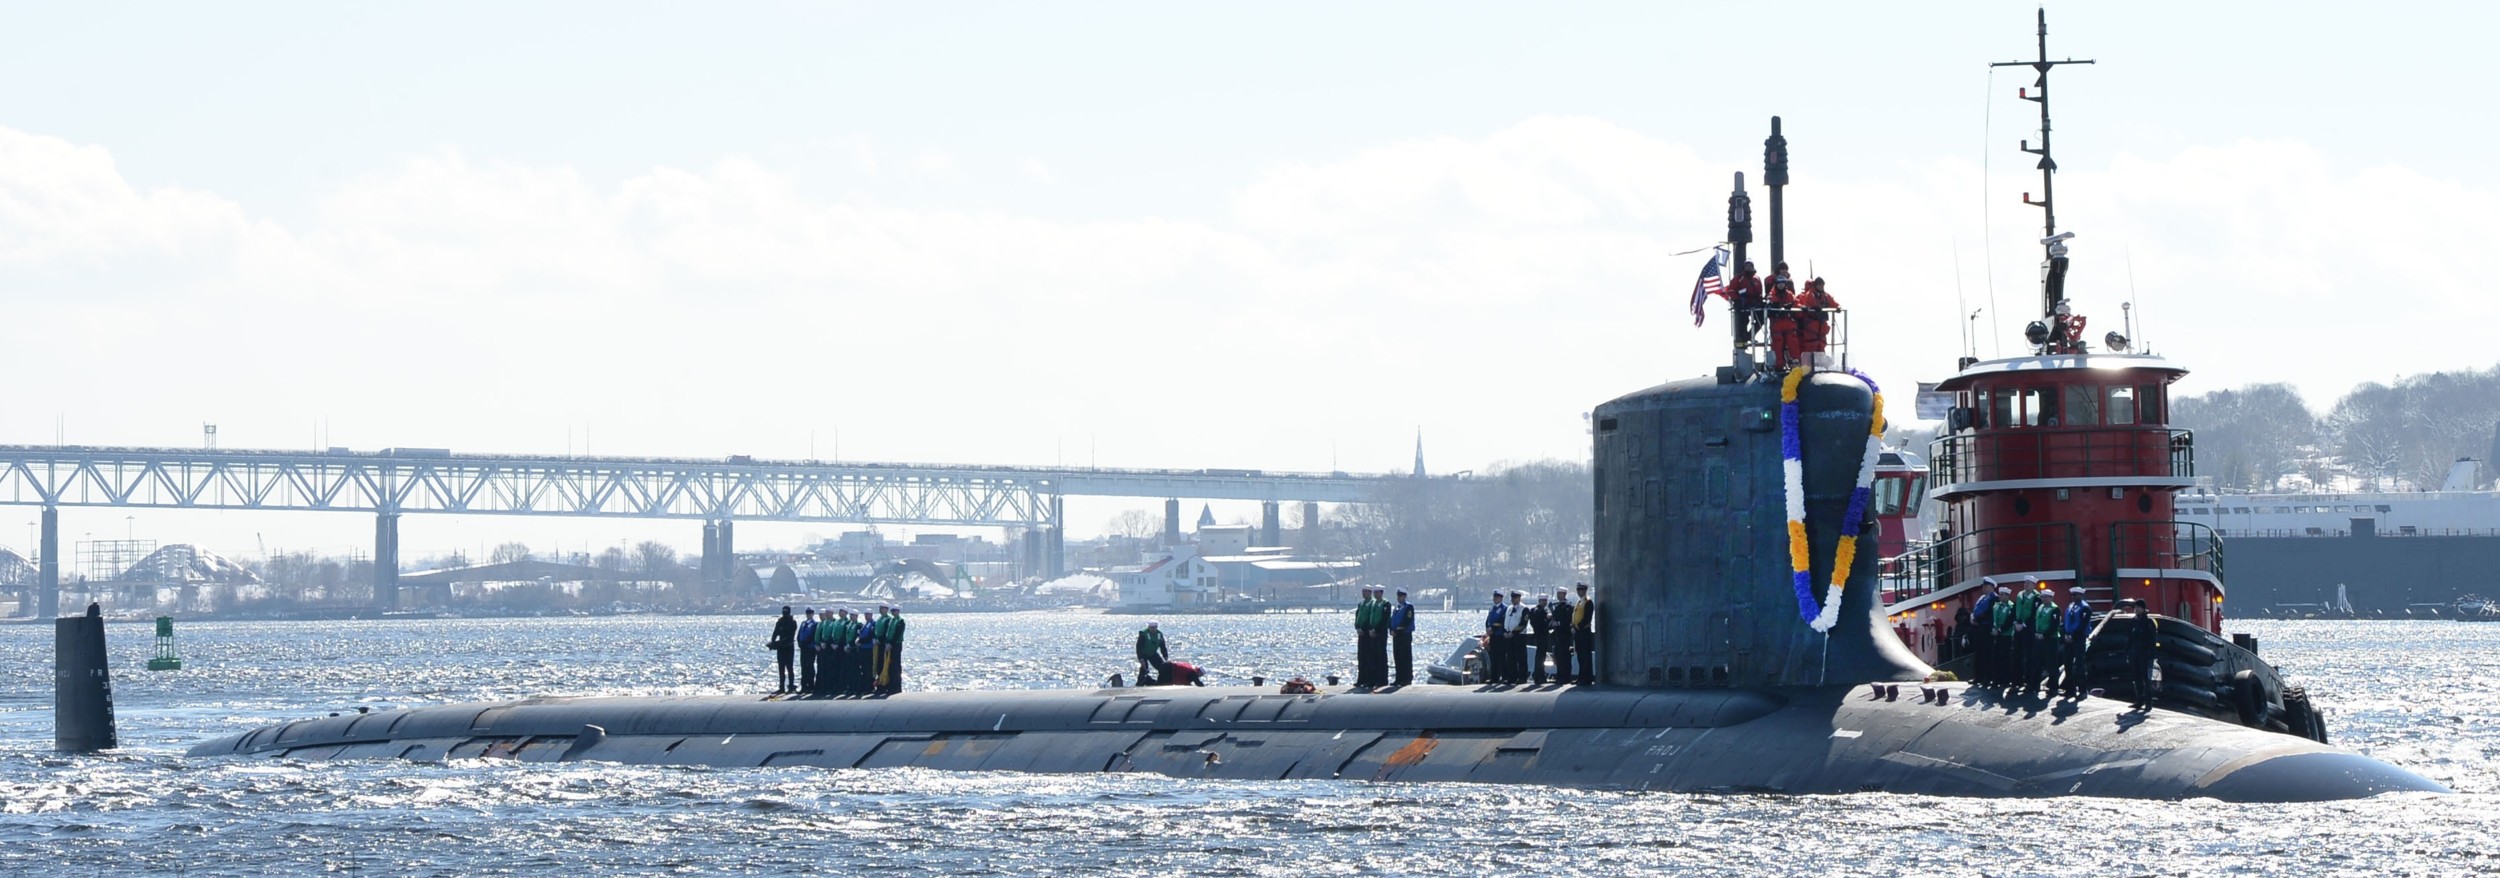 ssn-783 uss minnesota virginia class attack submarine us navy 33 groton connecticut